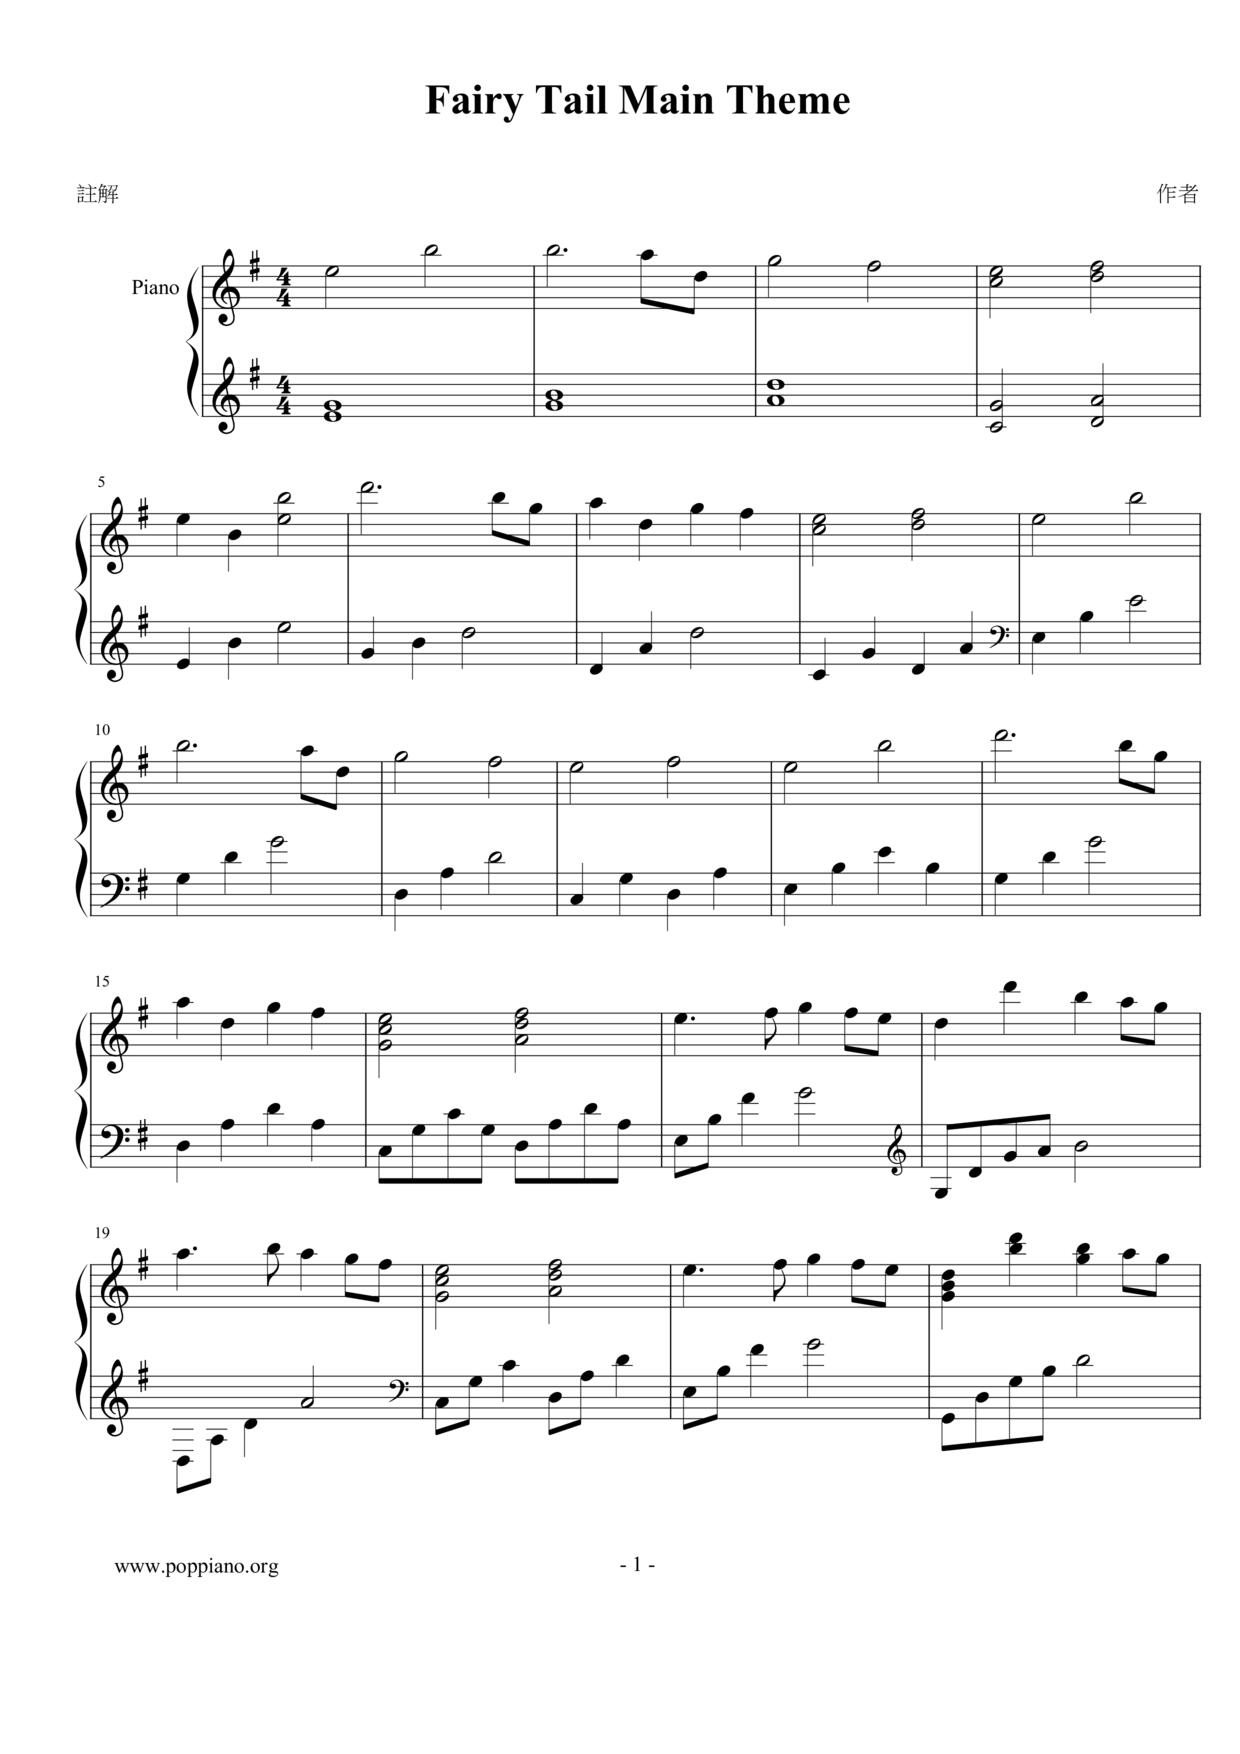 Fairy Tail Main Theme Score